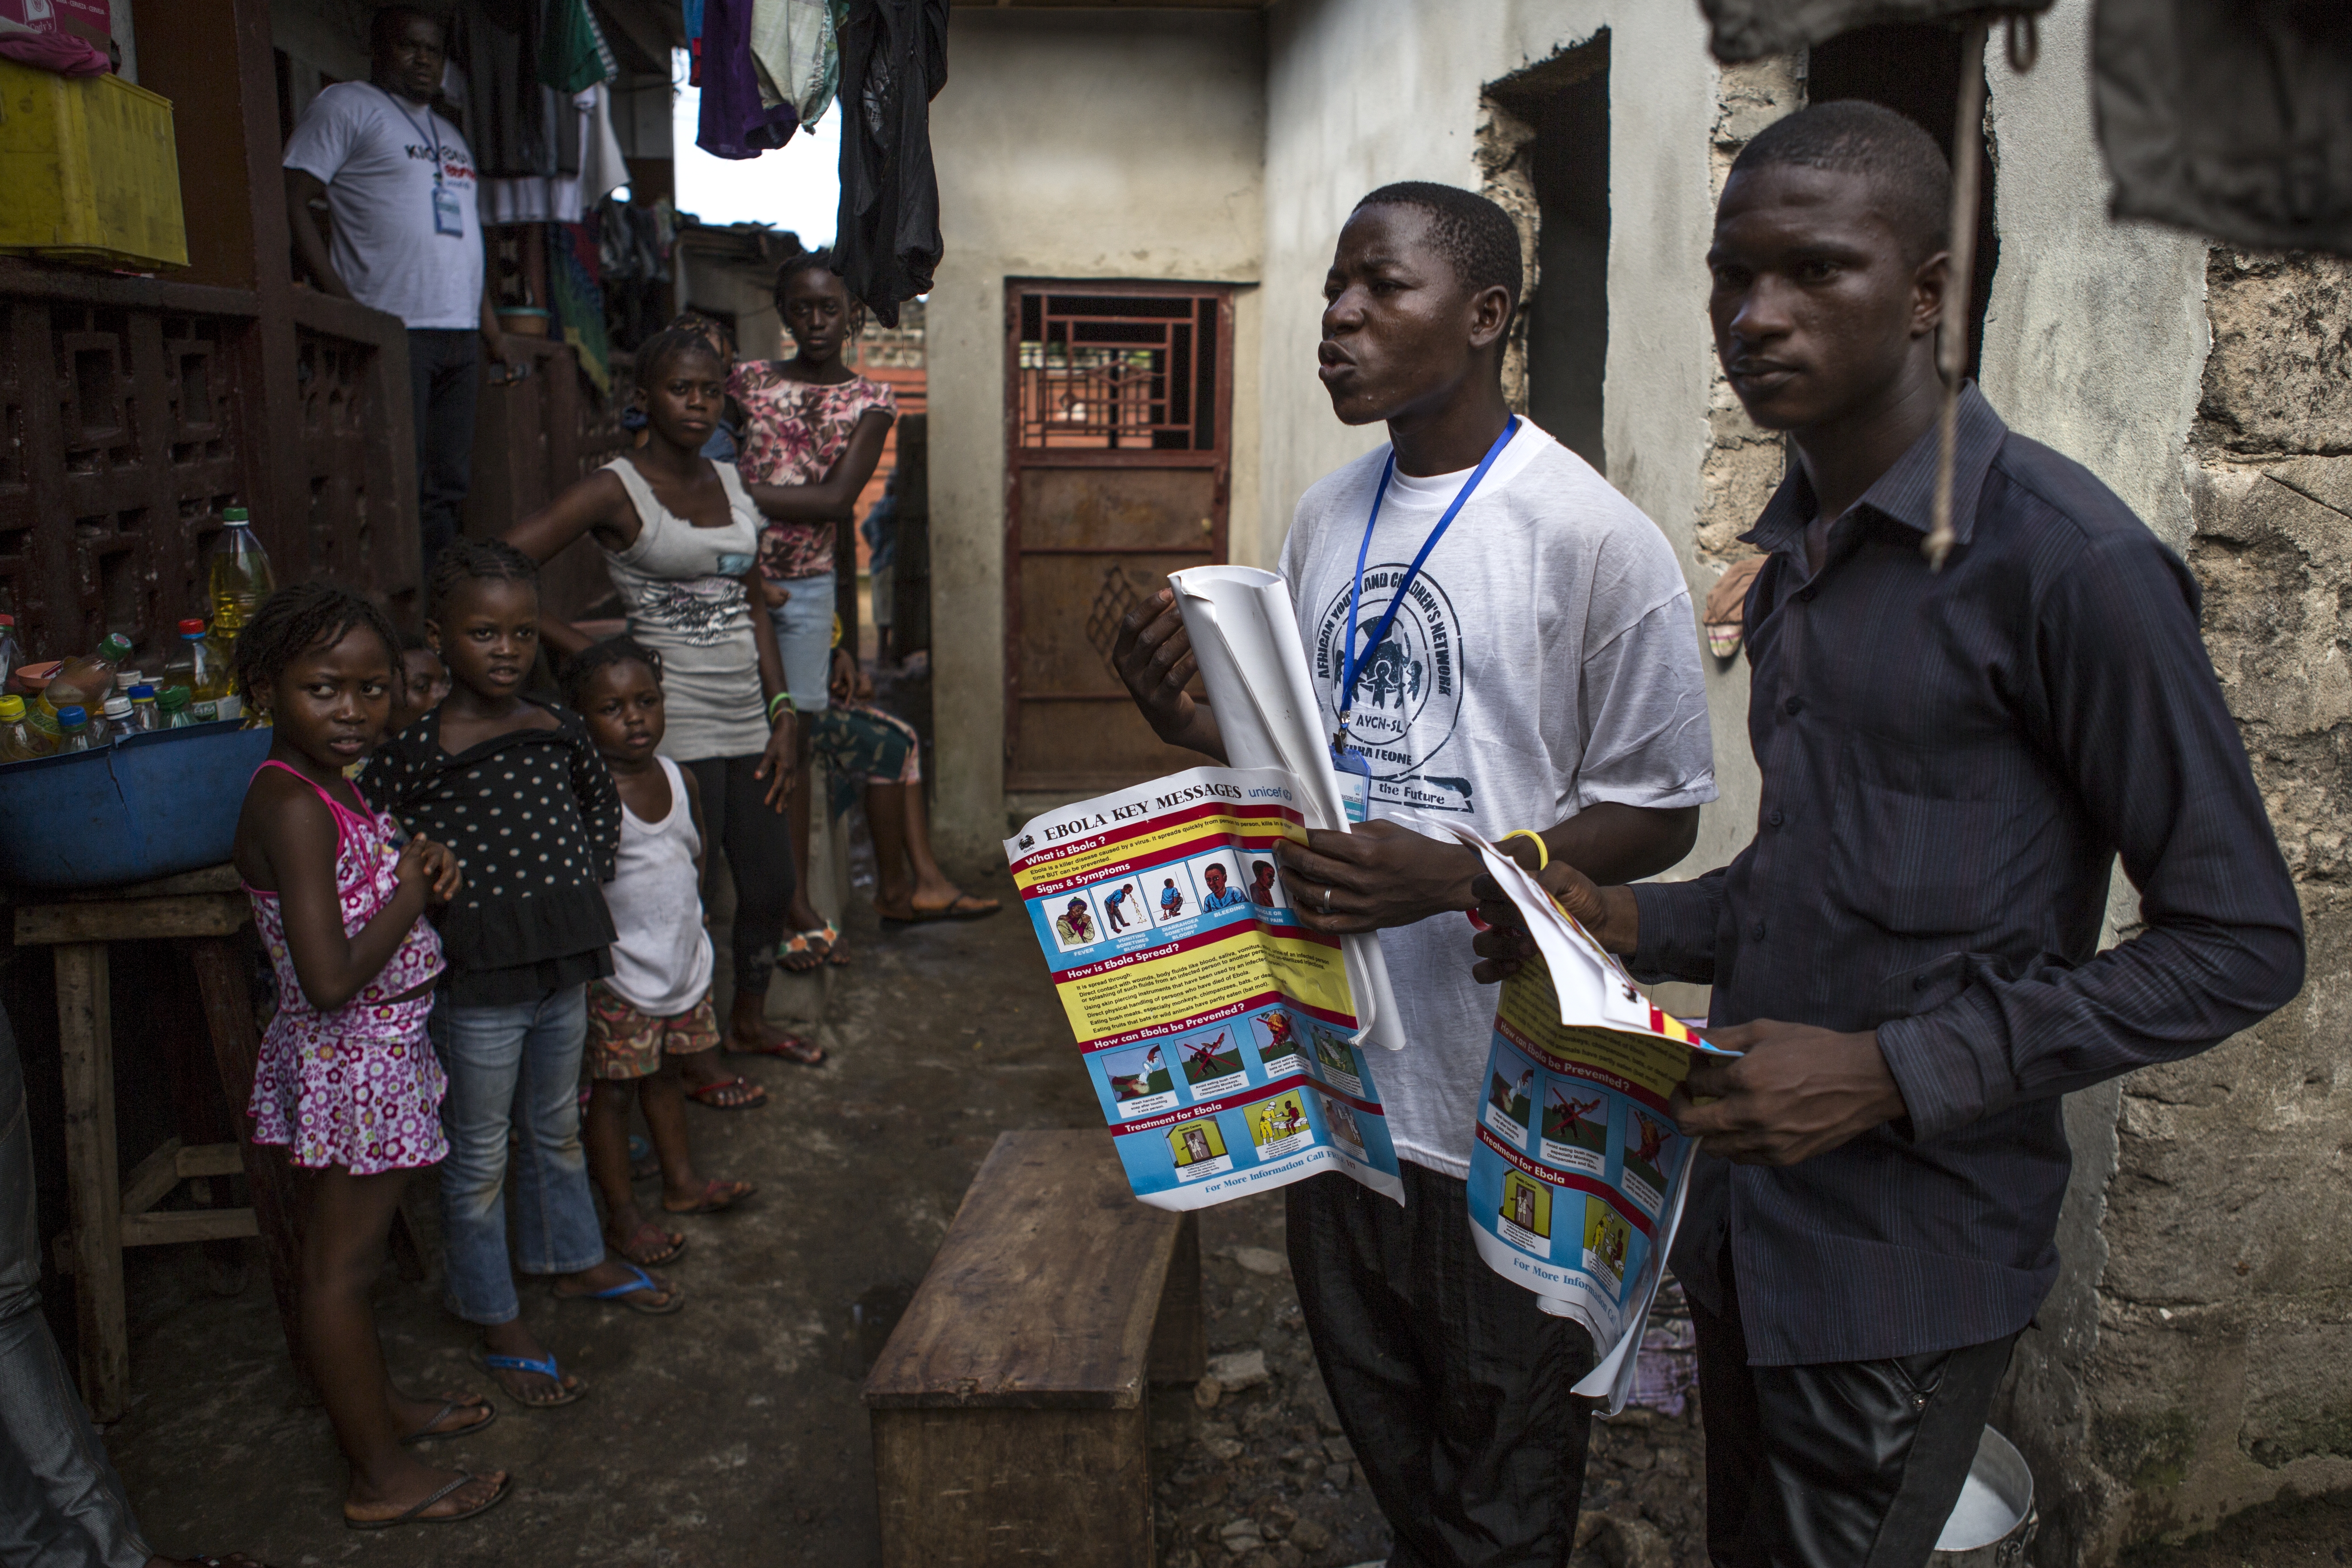 Campaigners provide information on Ebola in Sierra Leone